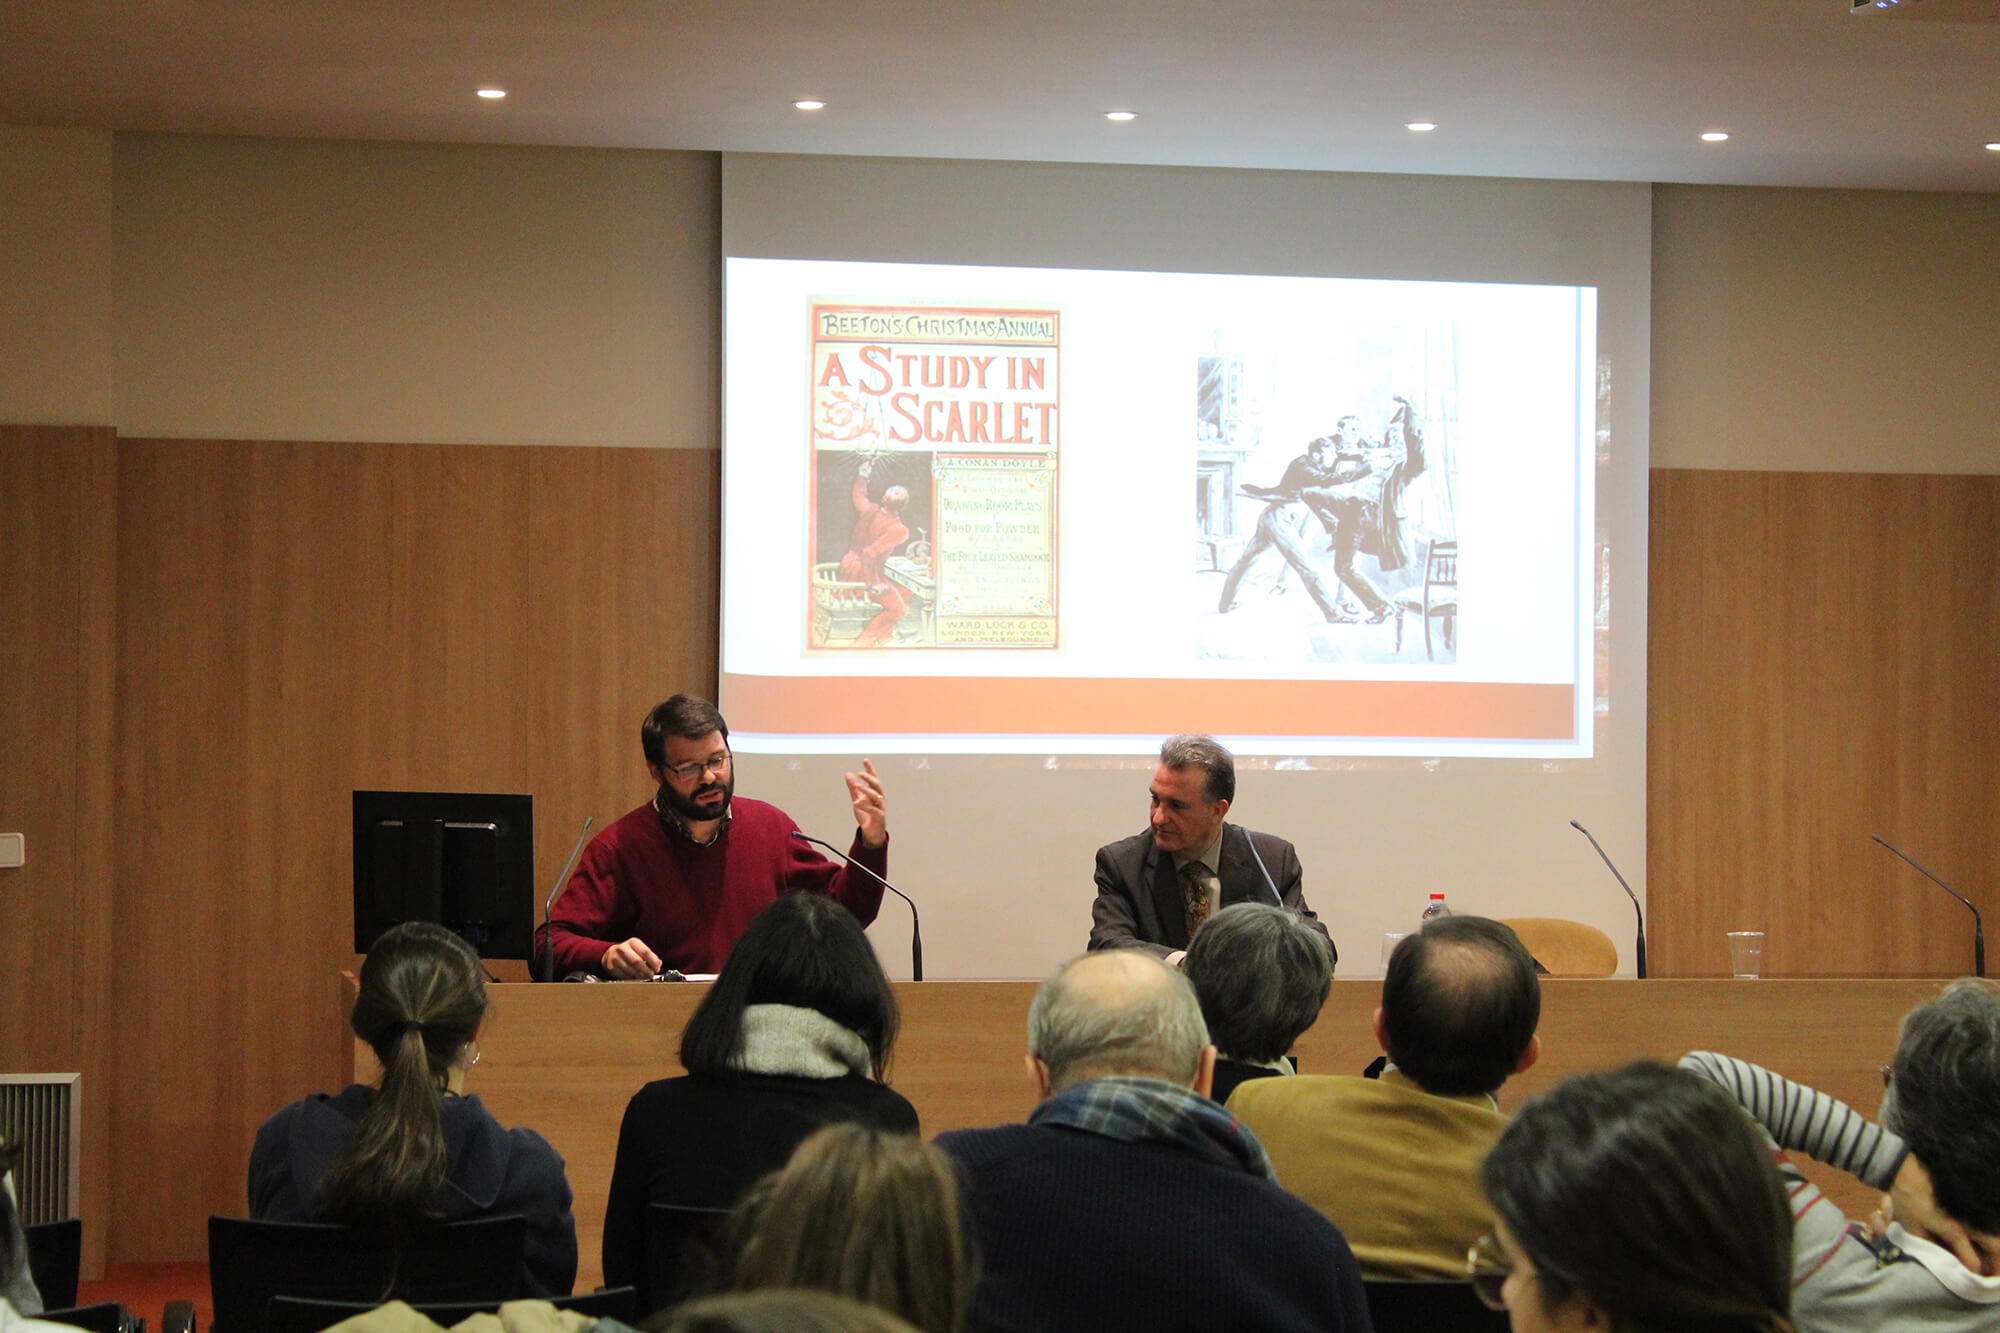 Josep Lluís Martín, doctor en Història Contemporània. Conferència “Sherlock Holmes entre nosaltres”. UIC Barcelona, 29 de gener de 2019.